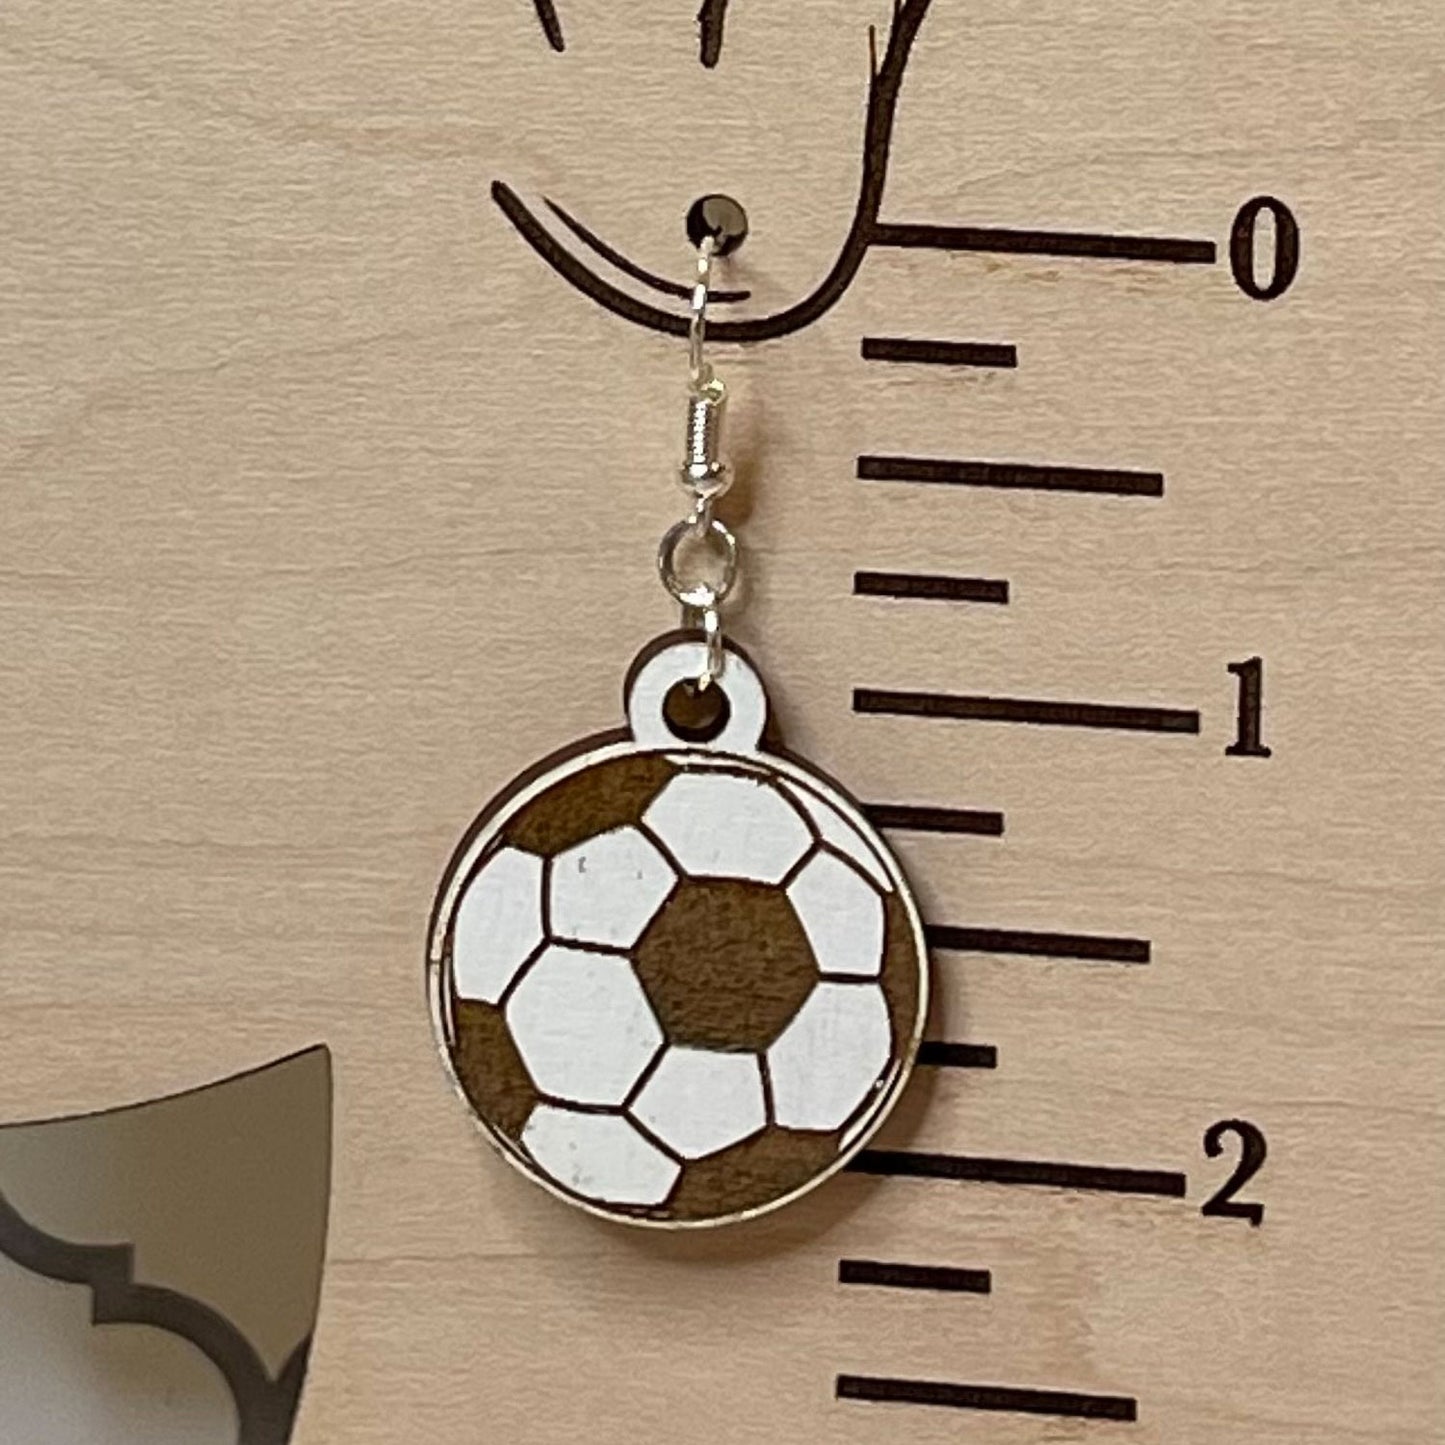 Soccer MOM Earrings - Sports Earrings (Set of 3)